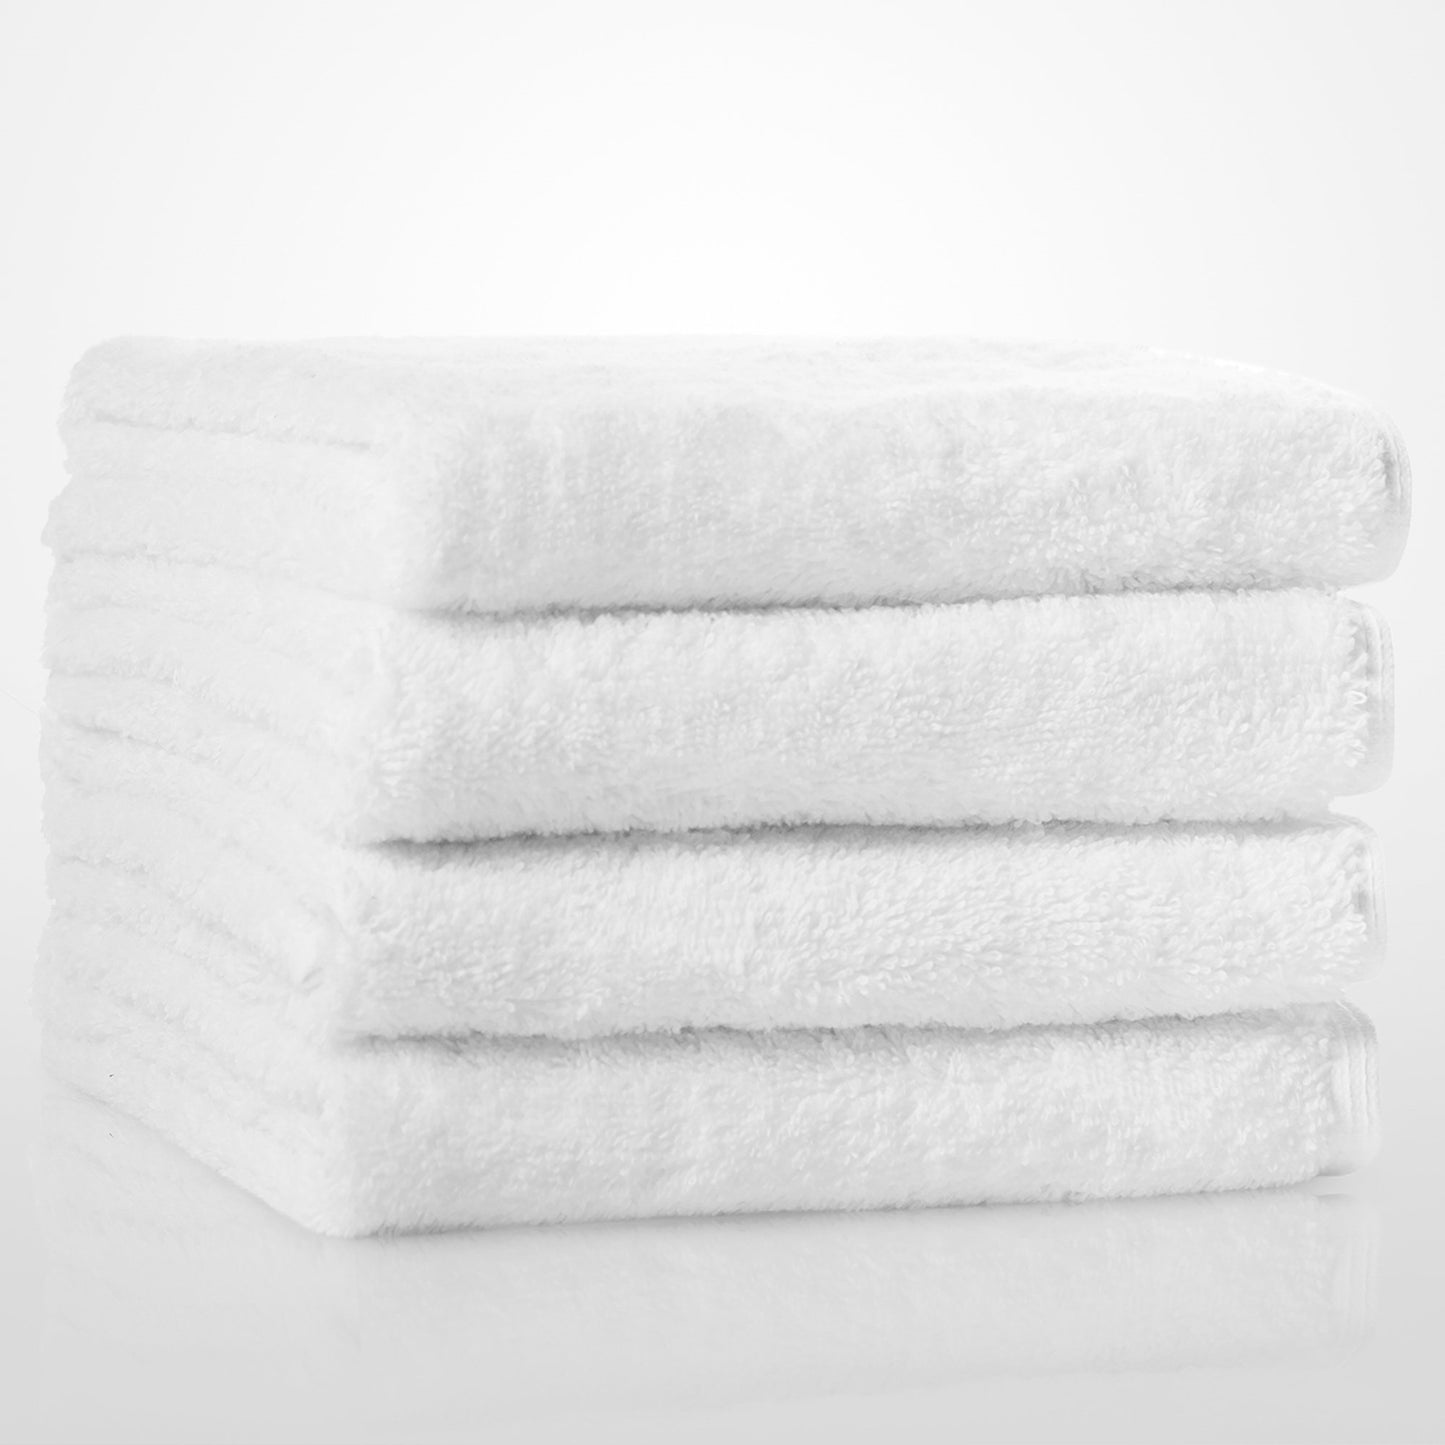 Hand Towel - White - 100% Cotton - 50 x 70 Cm